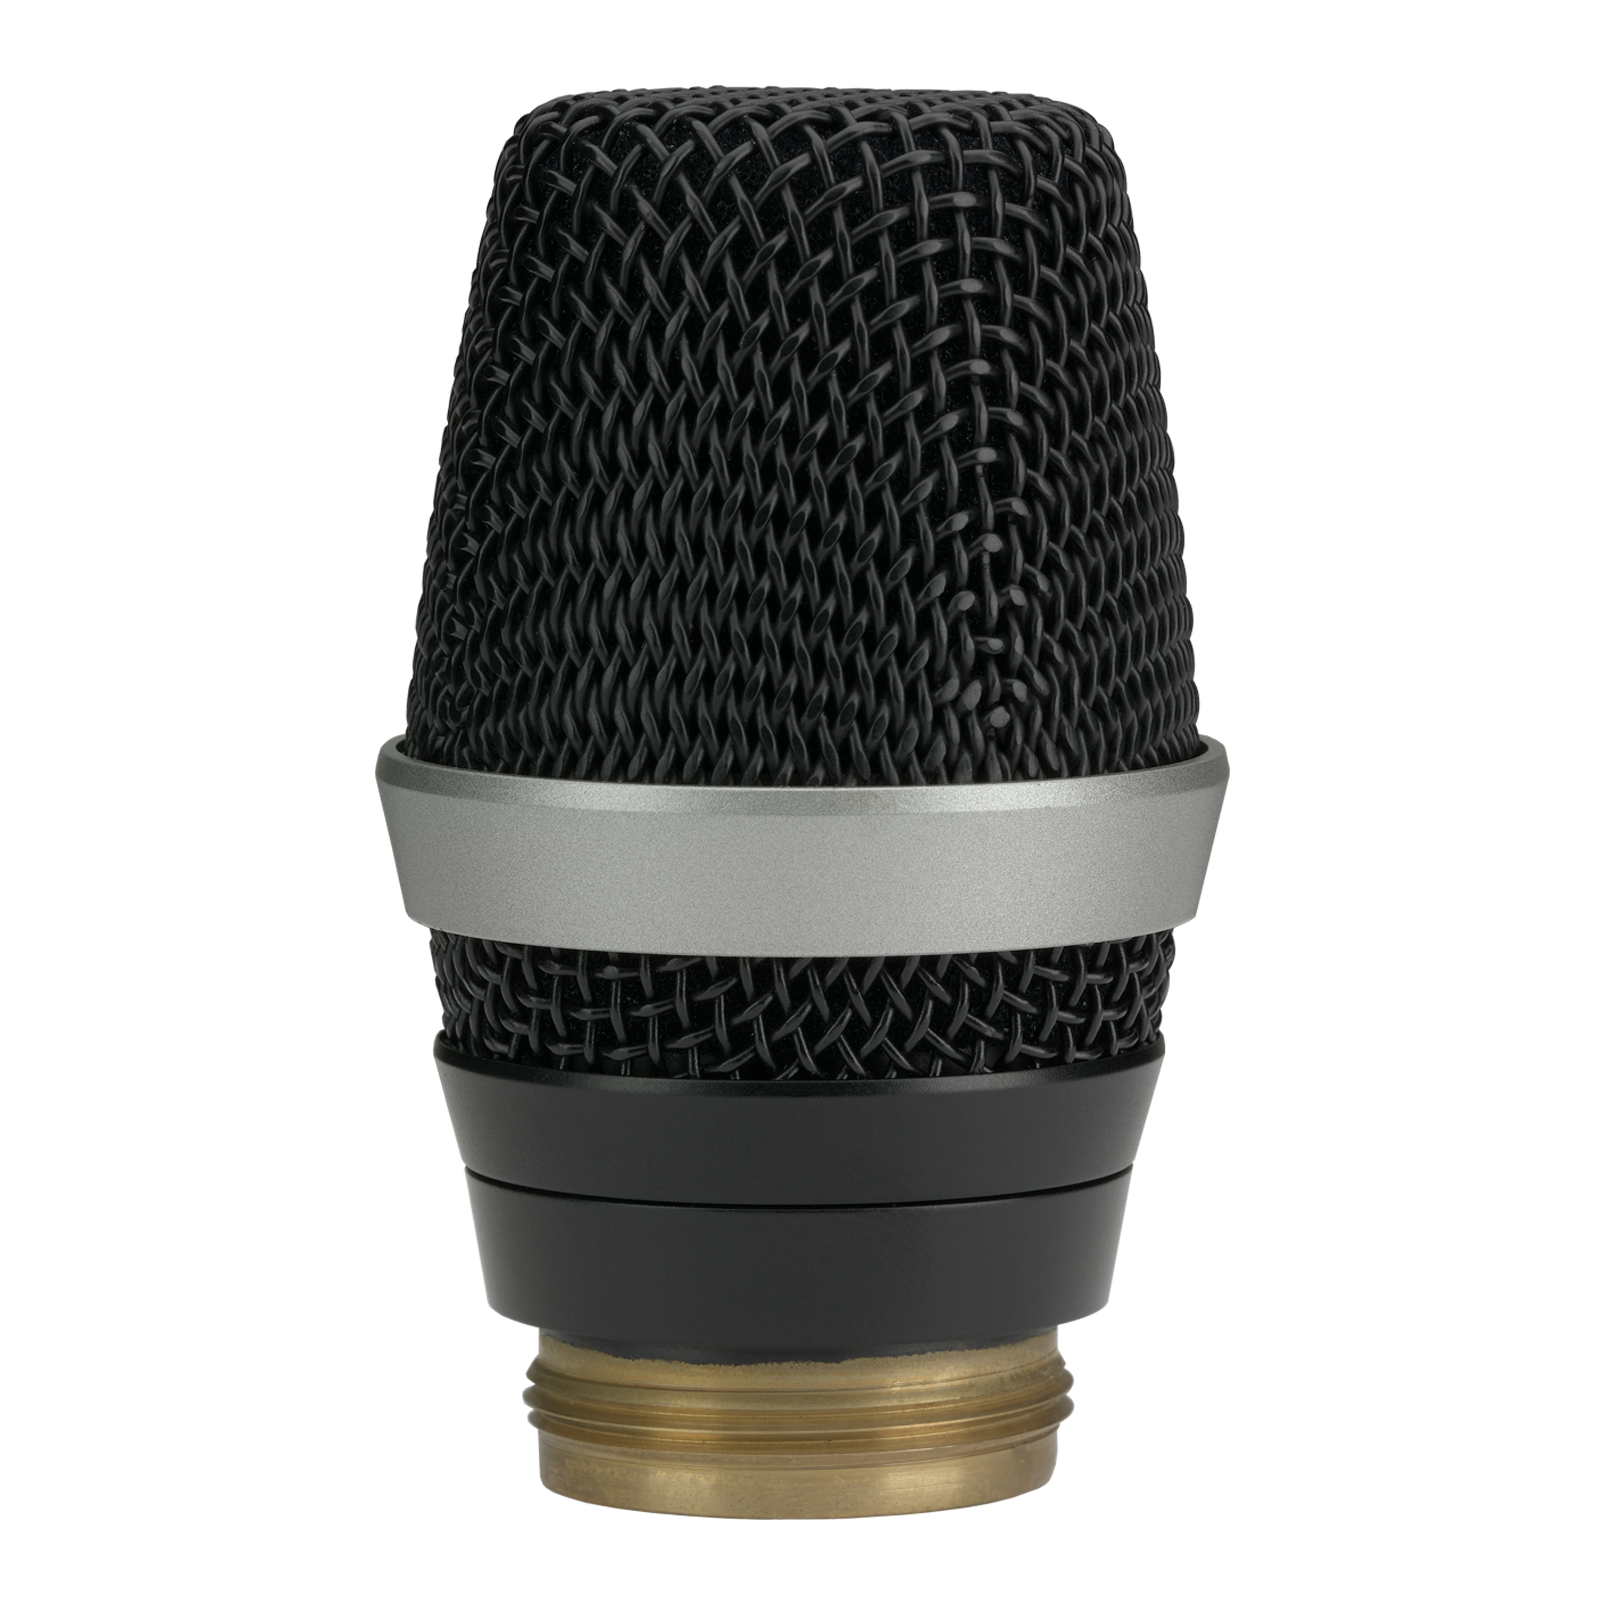 D5 WL1 (B-Stock) - Black - Professional dynamic microphone head - Hero